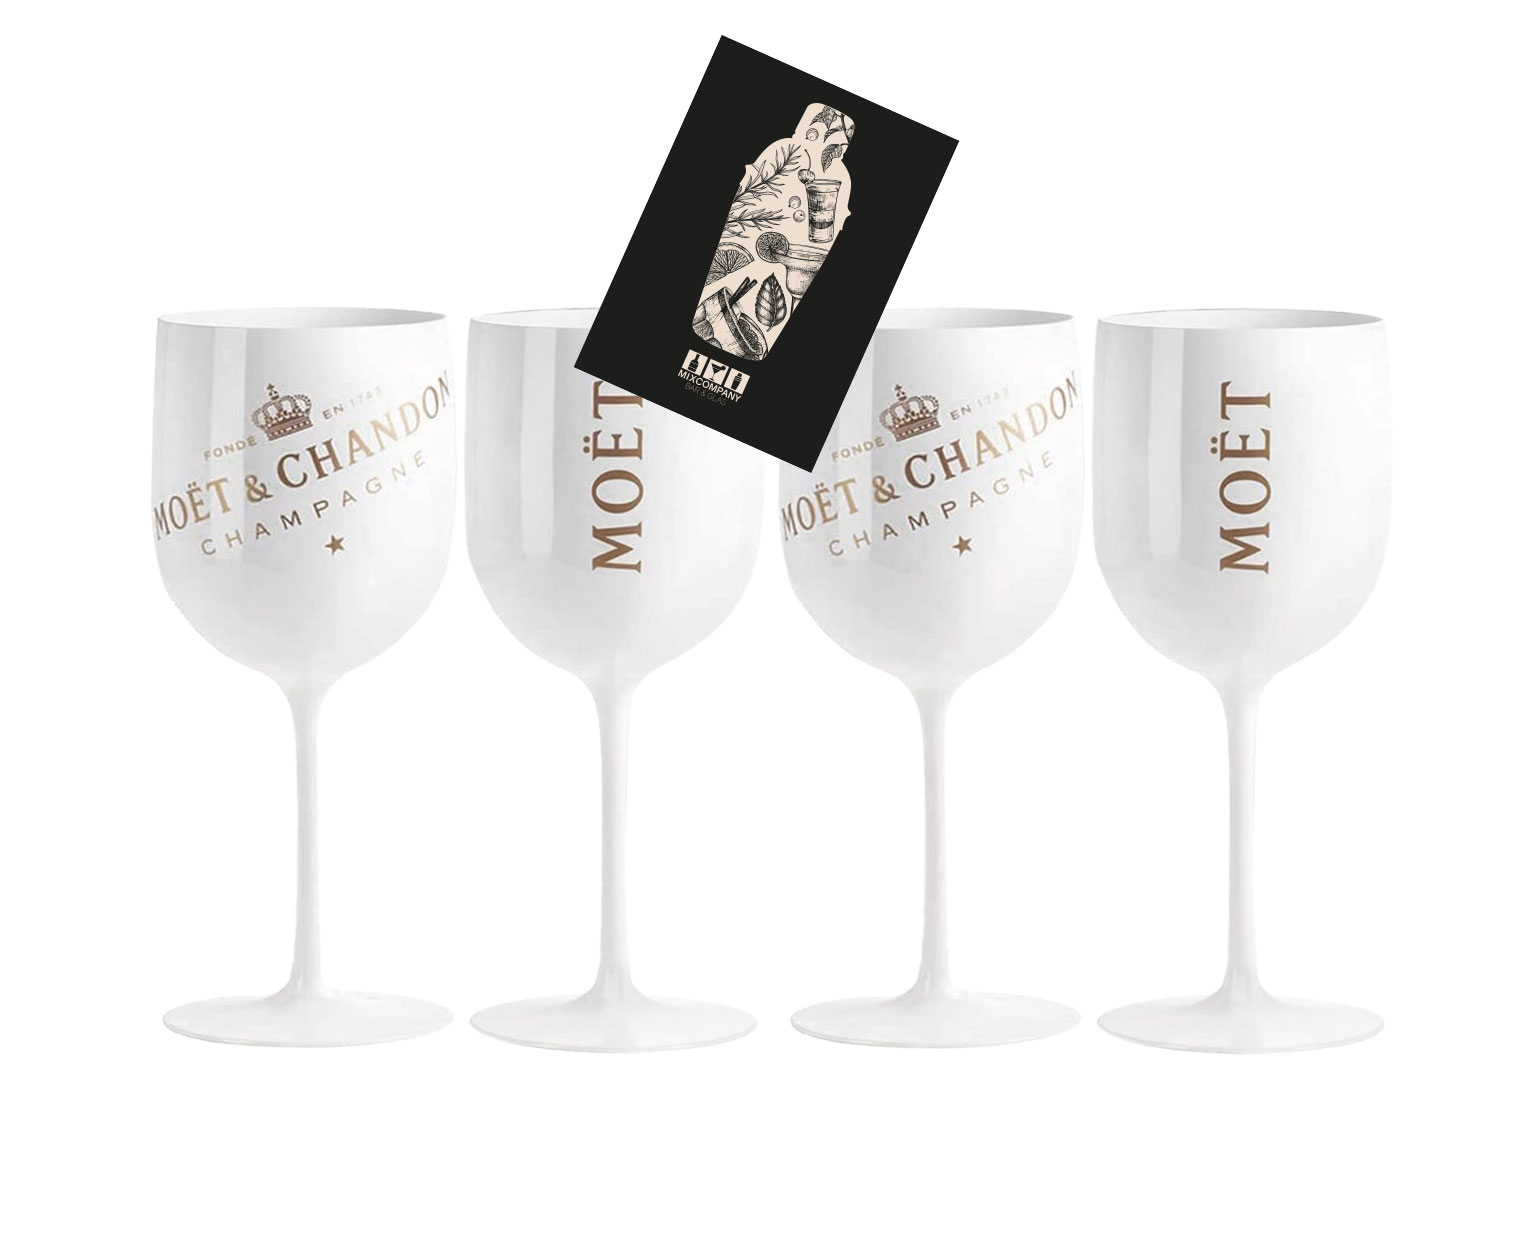 Moet & Chandon 4er Set Ice Imperial Acryl / Hartplastik Glas Champagner Gläser Set in weiß/gold Champagne Becher Kelche